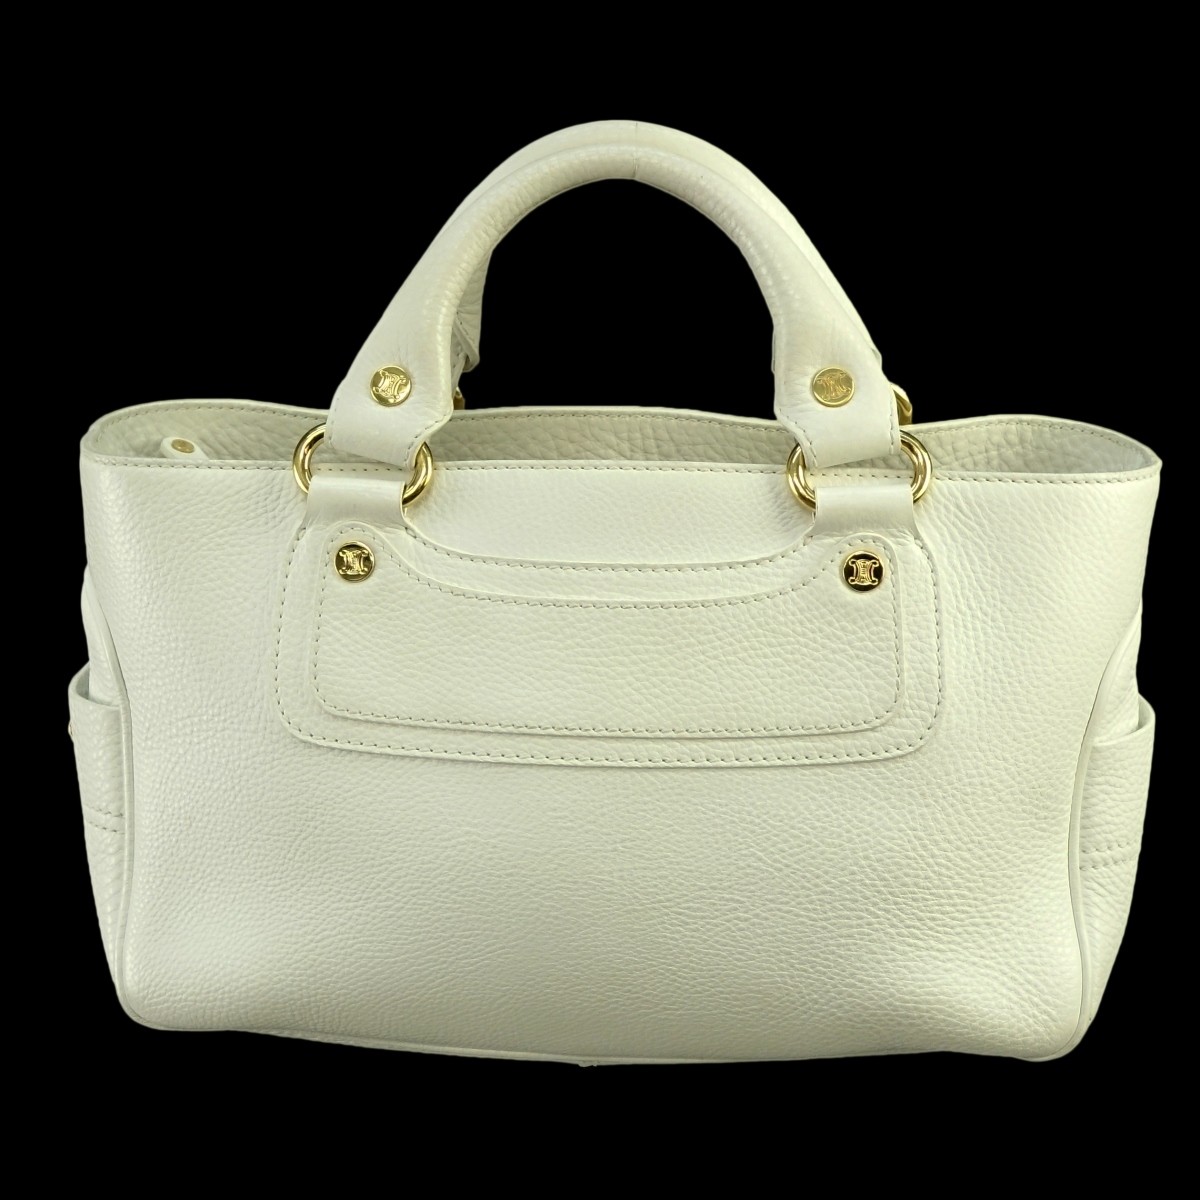 Celine White Leather Boogie Bag